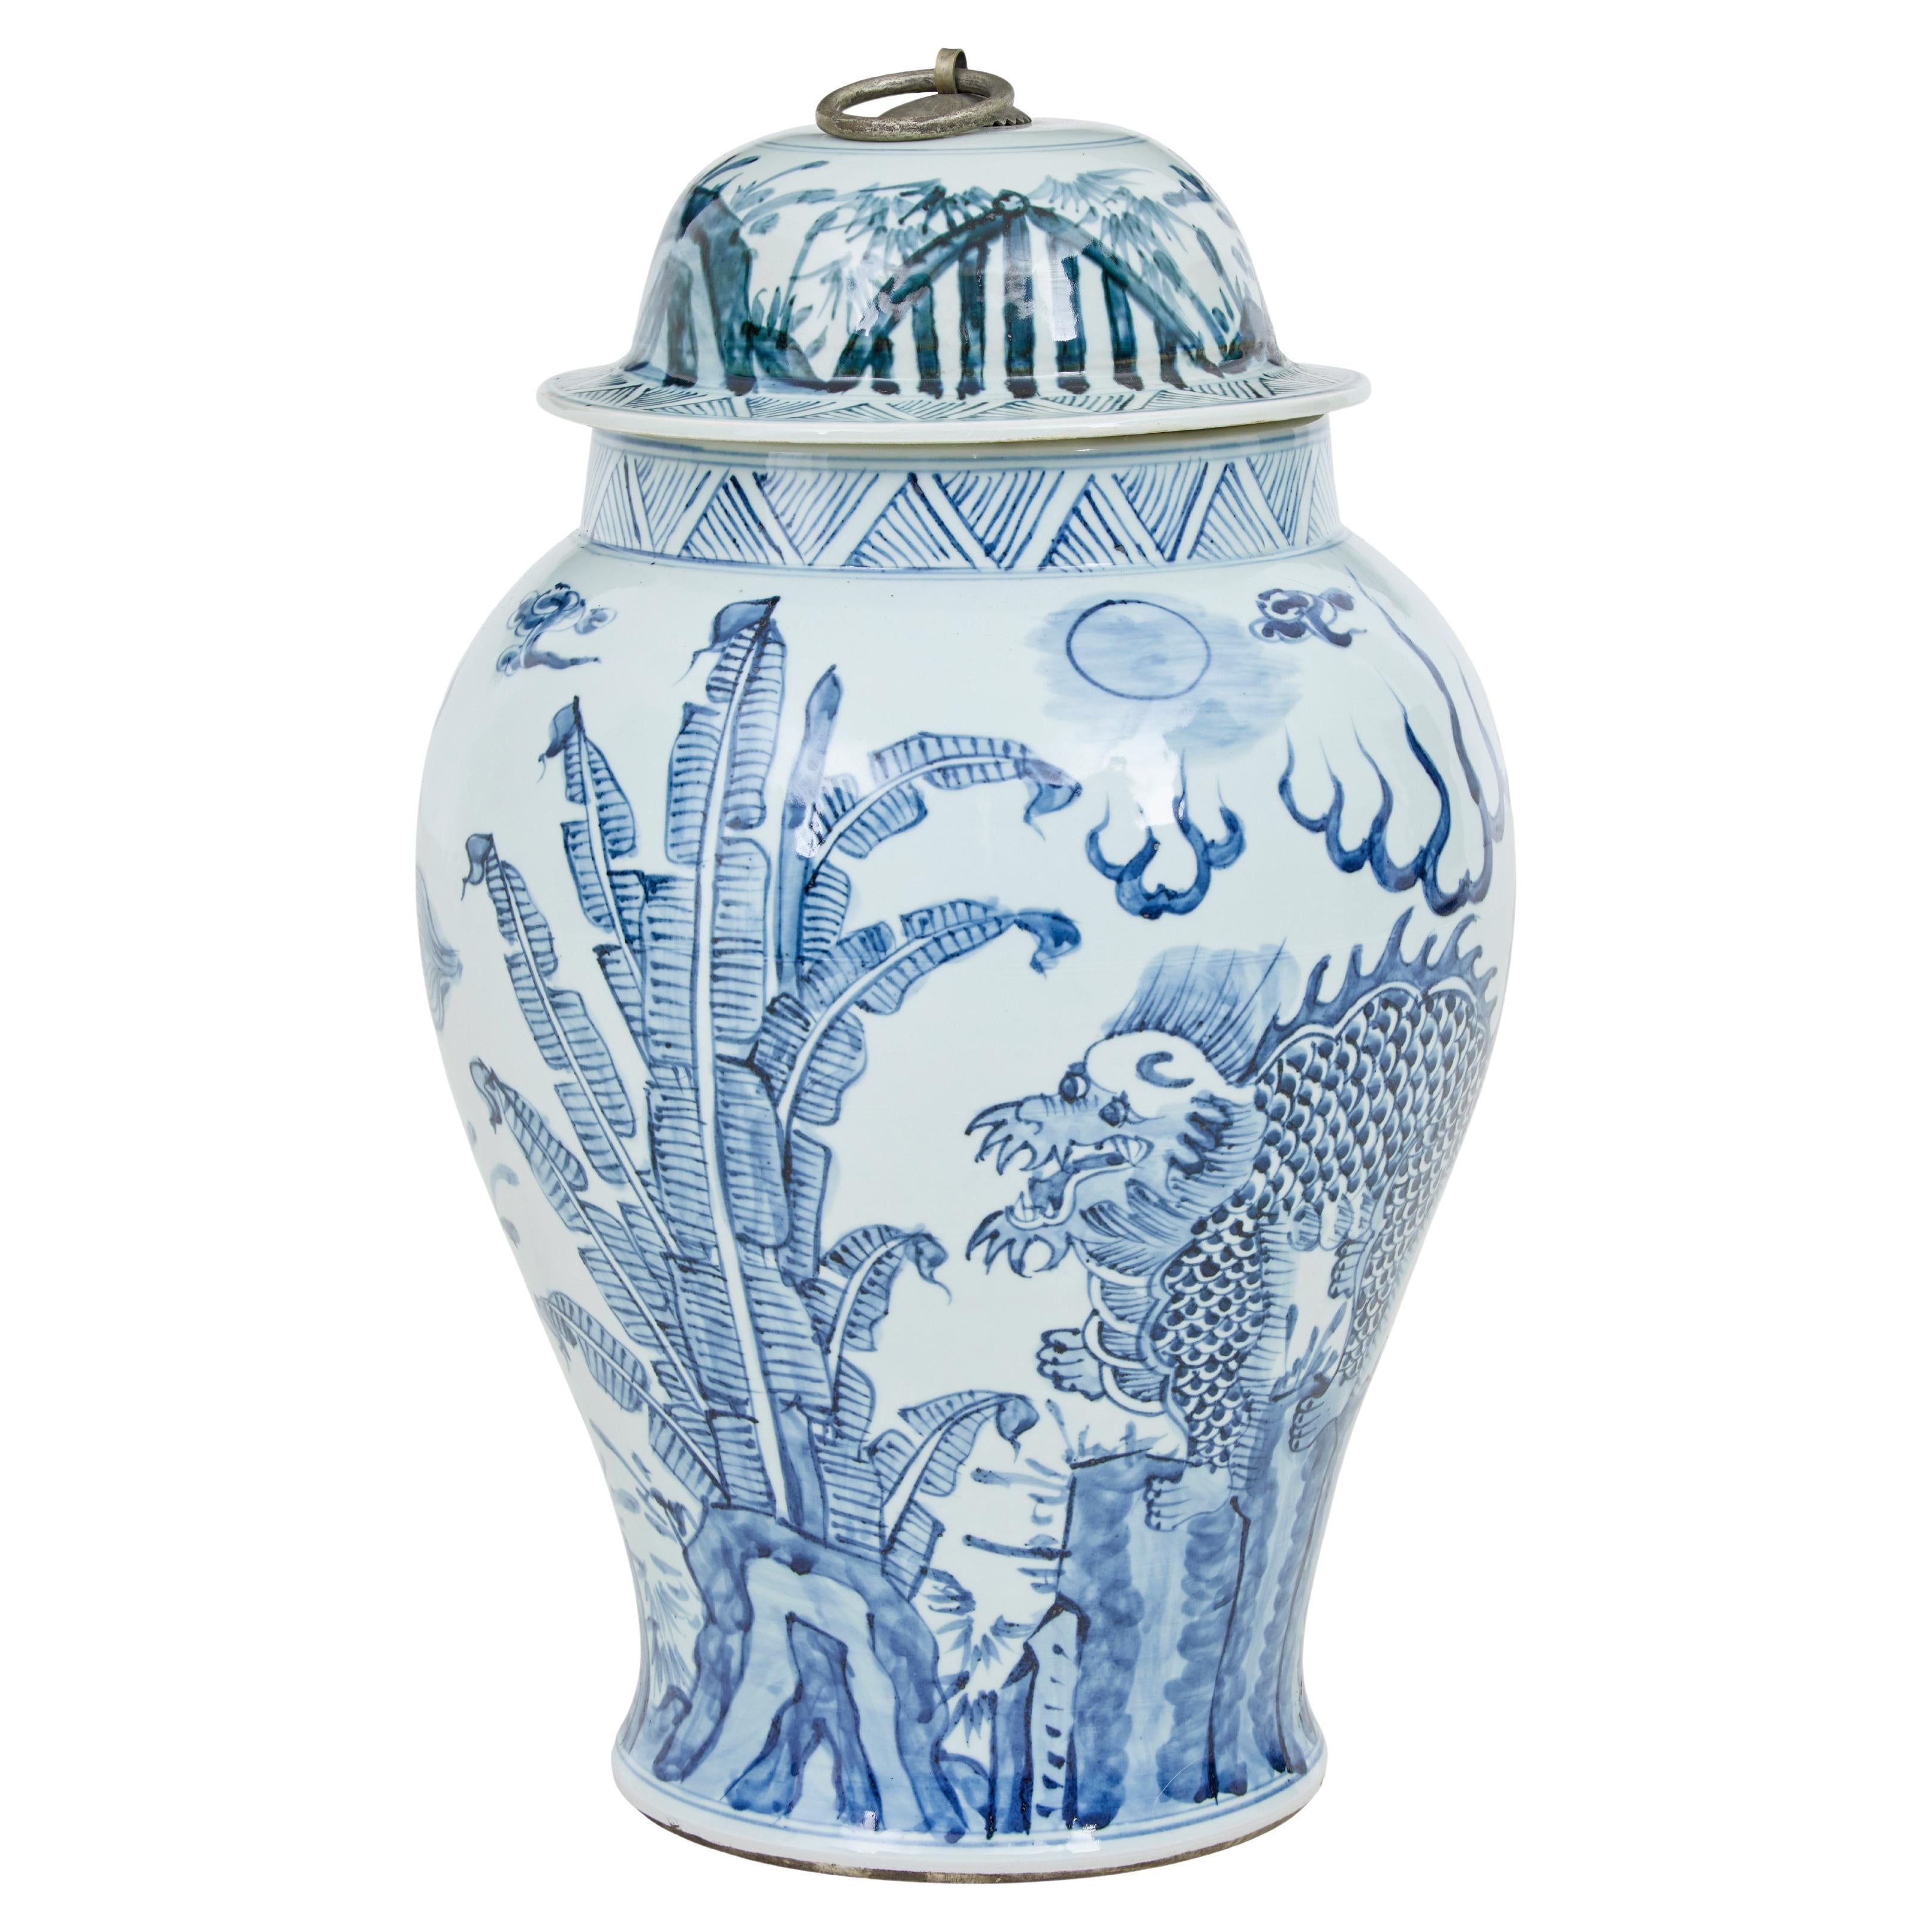 Decorative mid century ceramic ginger jar For Sale